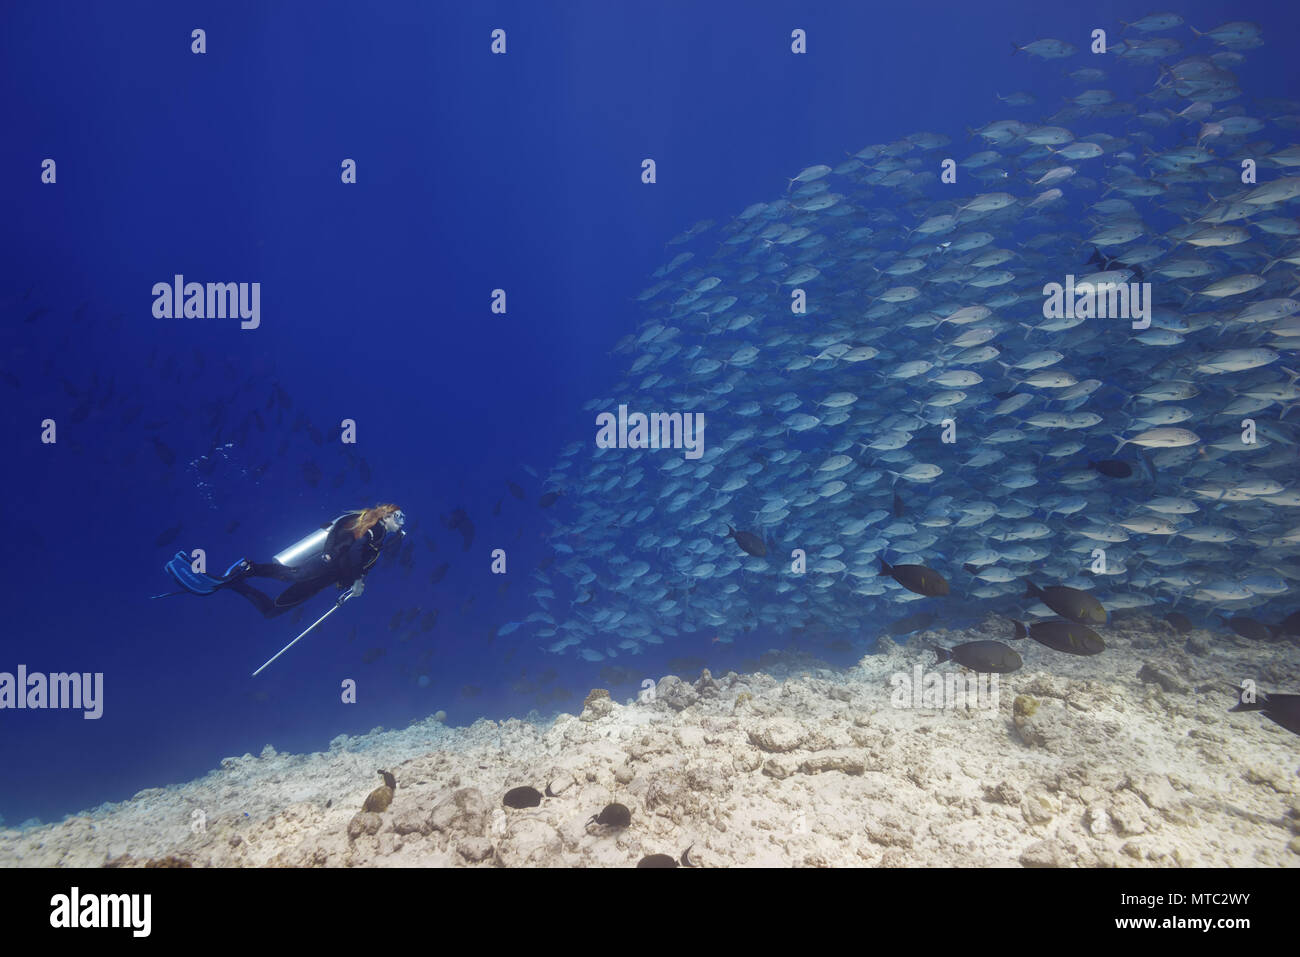 Hembra Scuba Diver nadará con escuela de bayads en agua azul a lo largo de arrecifes de coral. Bayad, jureles patudo negruzcas o Jack (Caranx sexfasciatus) Foto de stock